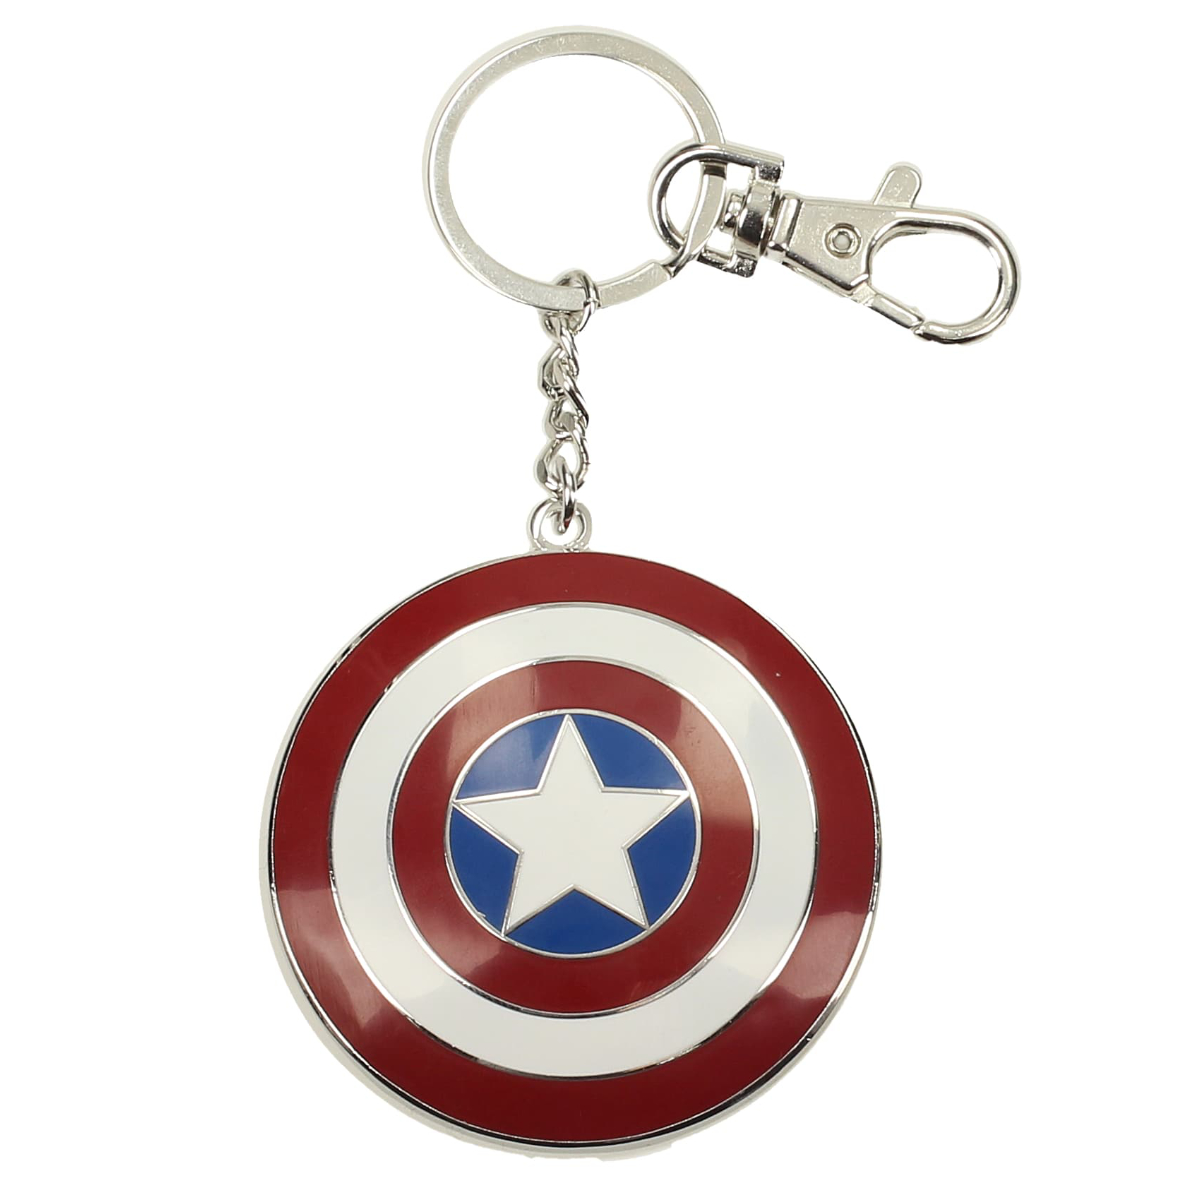 Gummi Schlüsselanhänger Captain America 2 Marvel Comics keychain Avenger